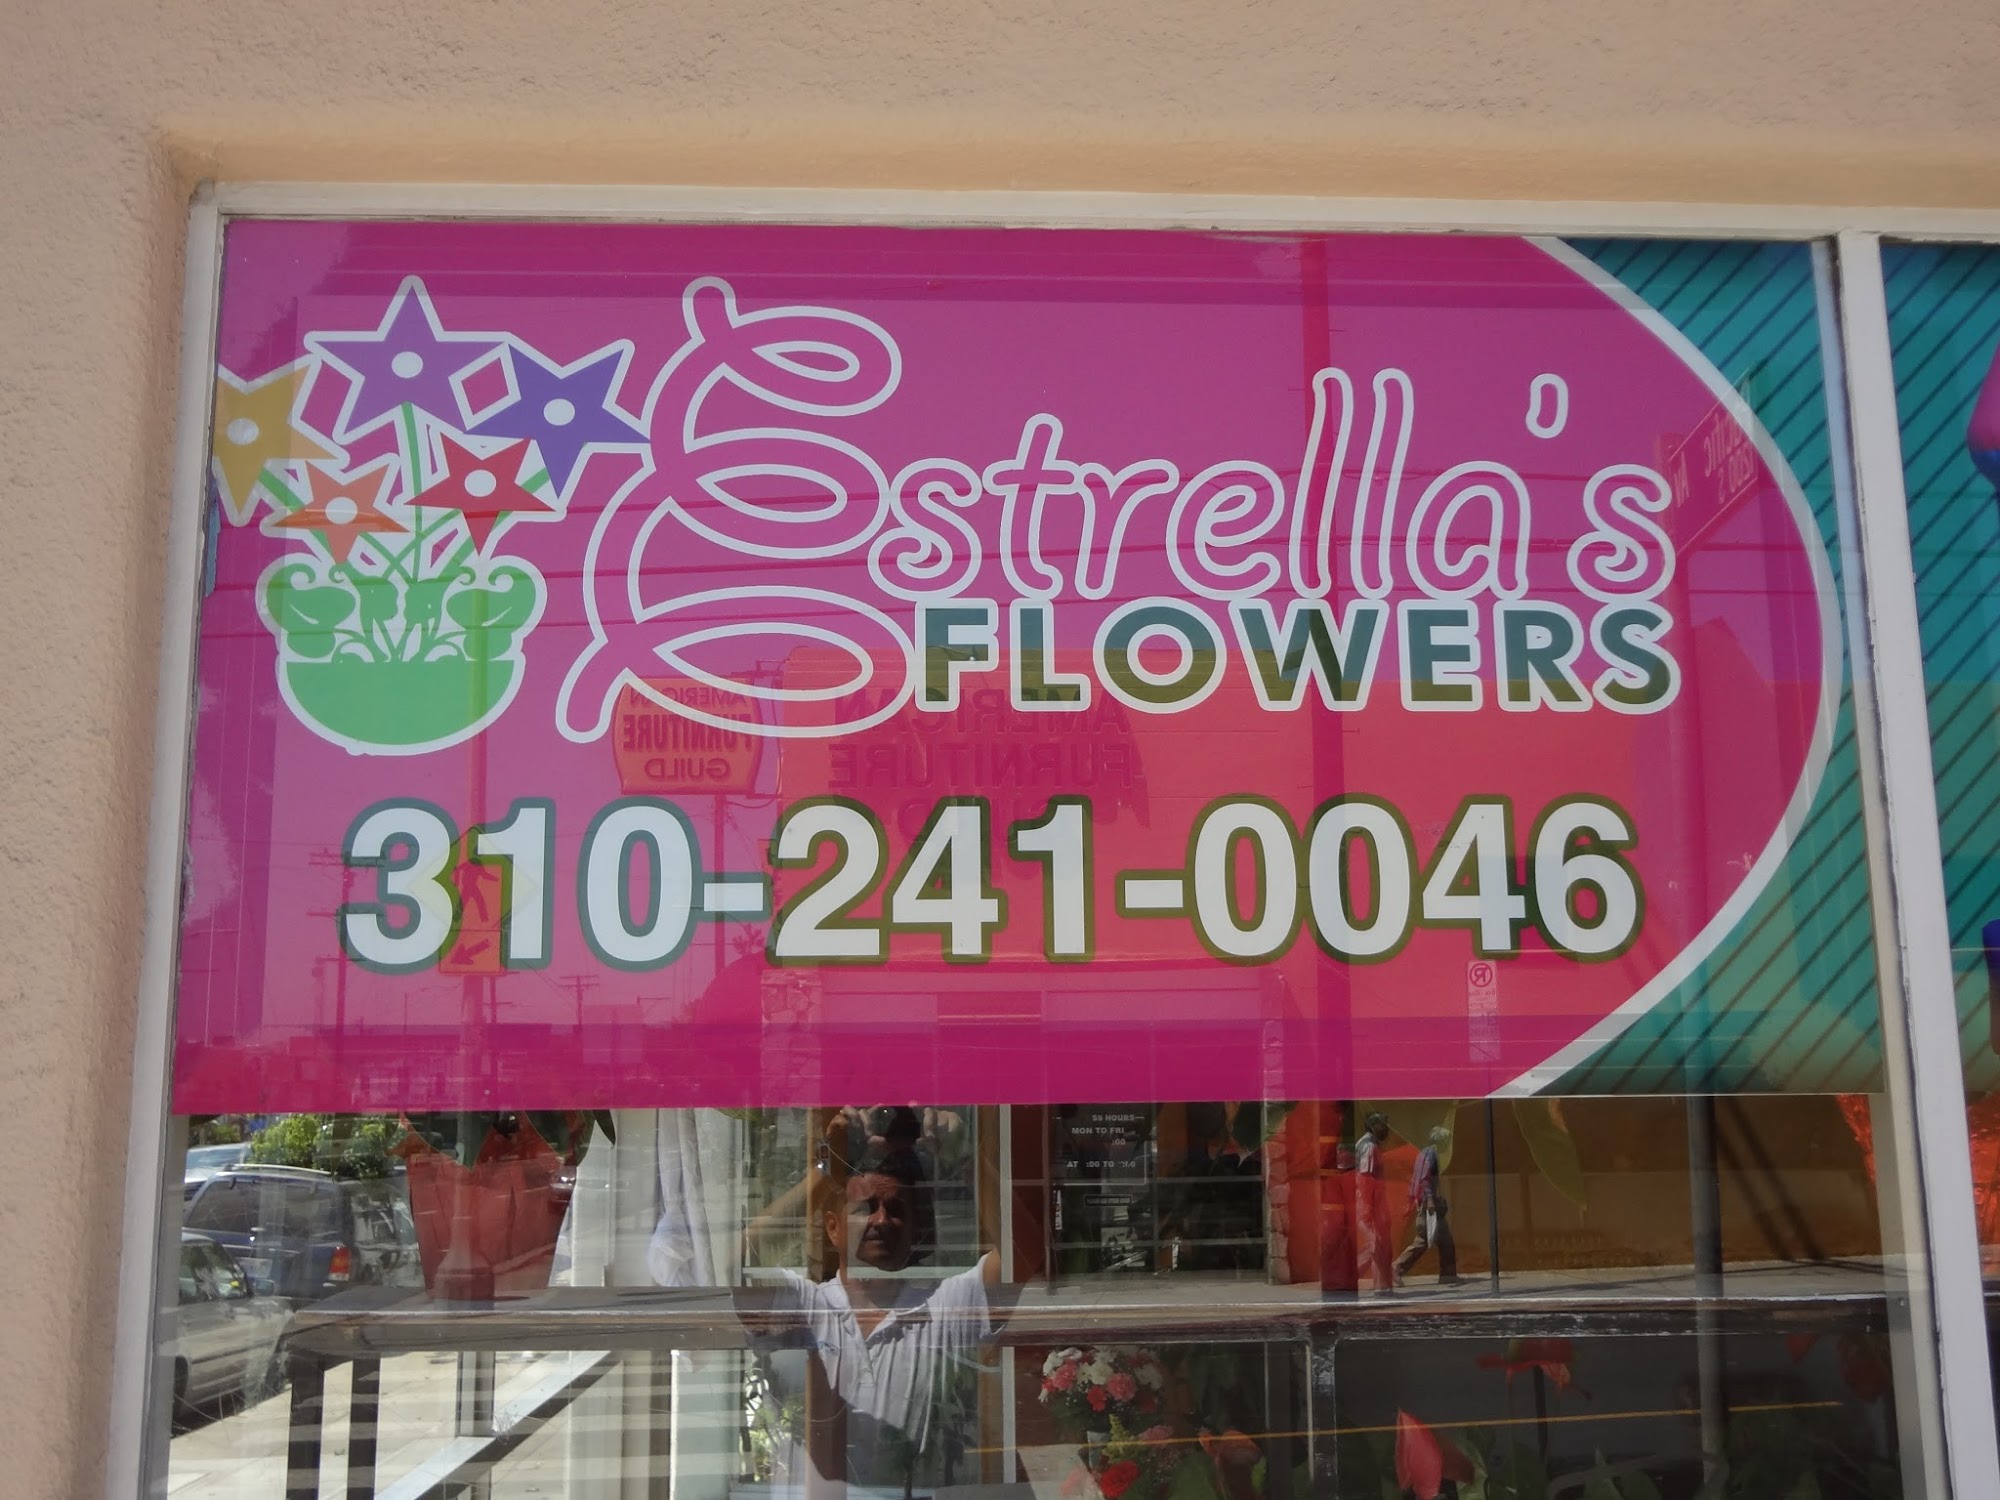 Estrella's Flowers